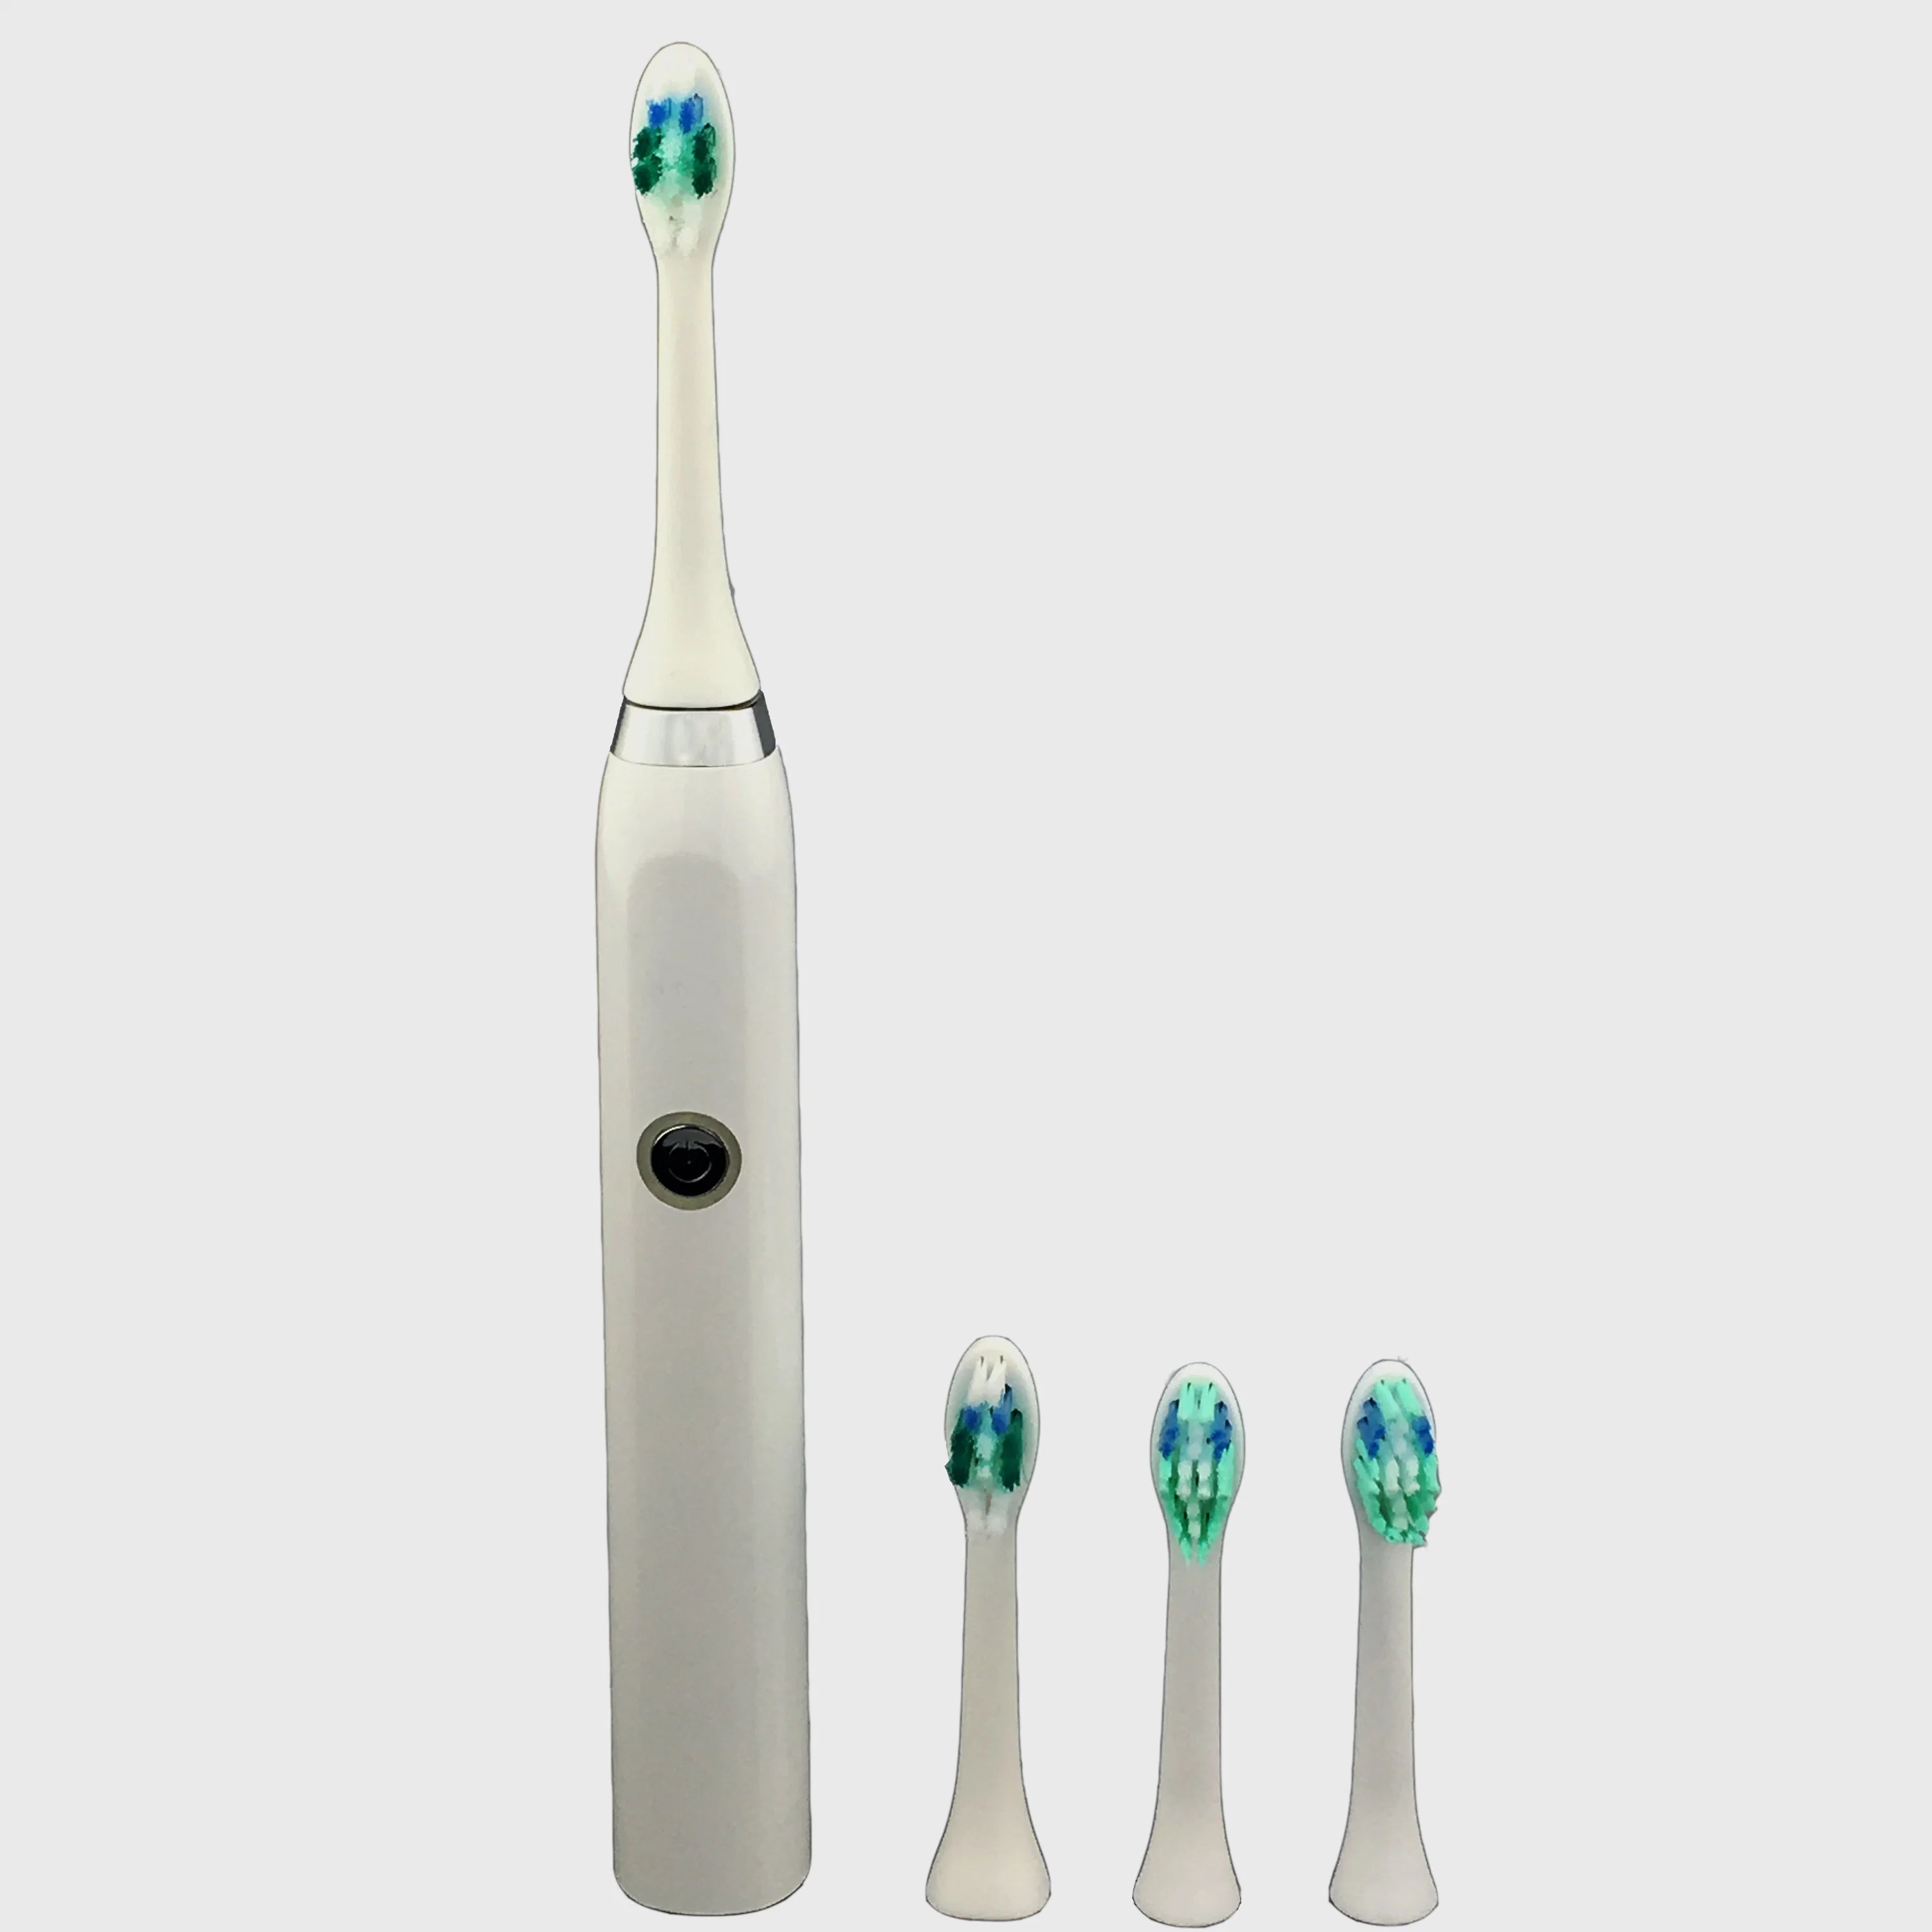 Adulto à prova de água IPX7 dentes ultra-sónico eléctrico